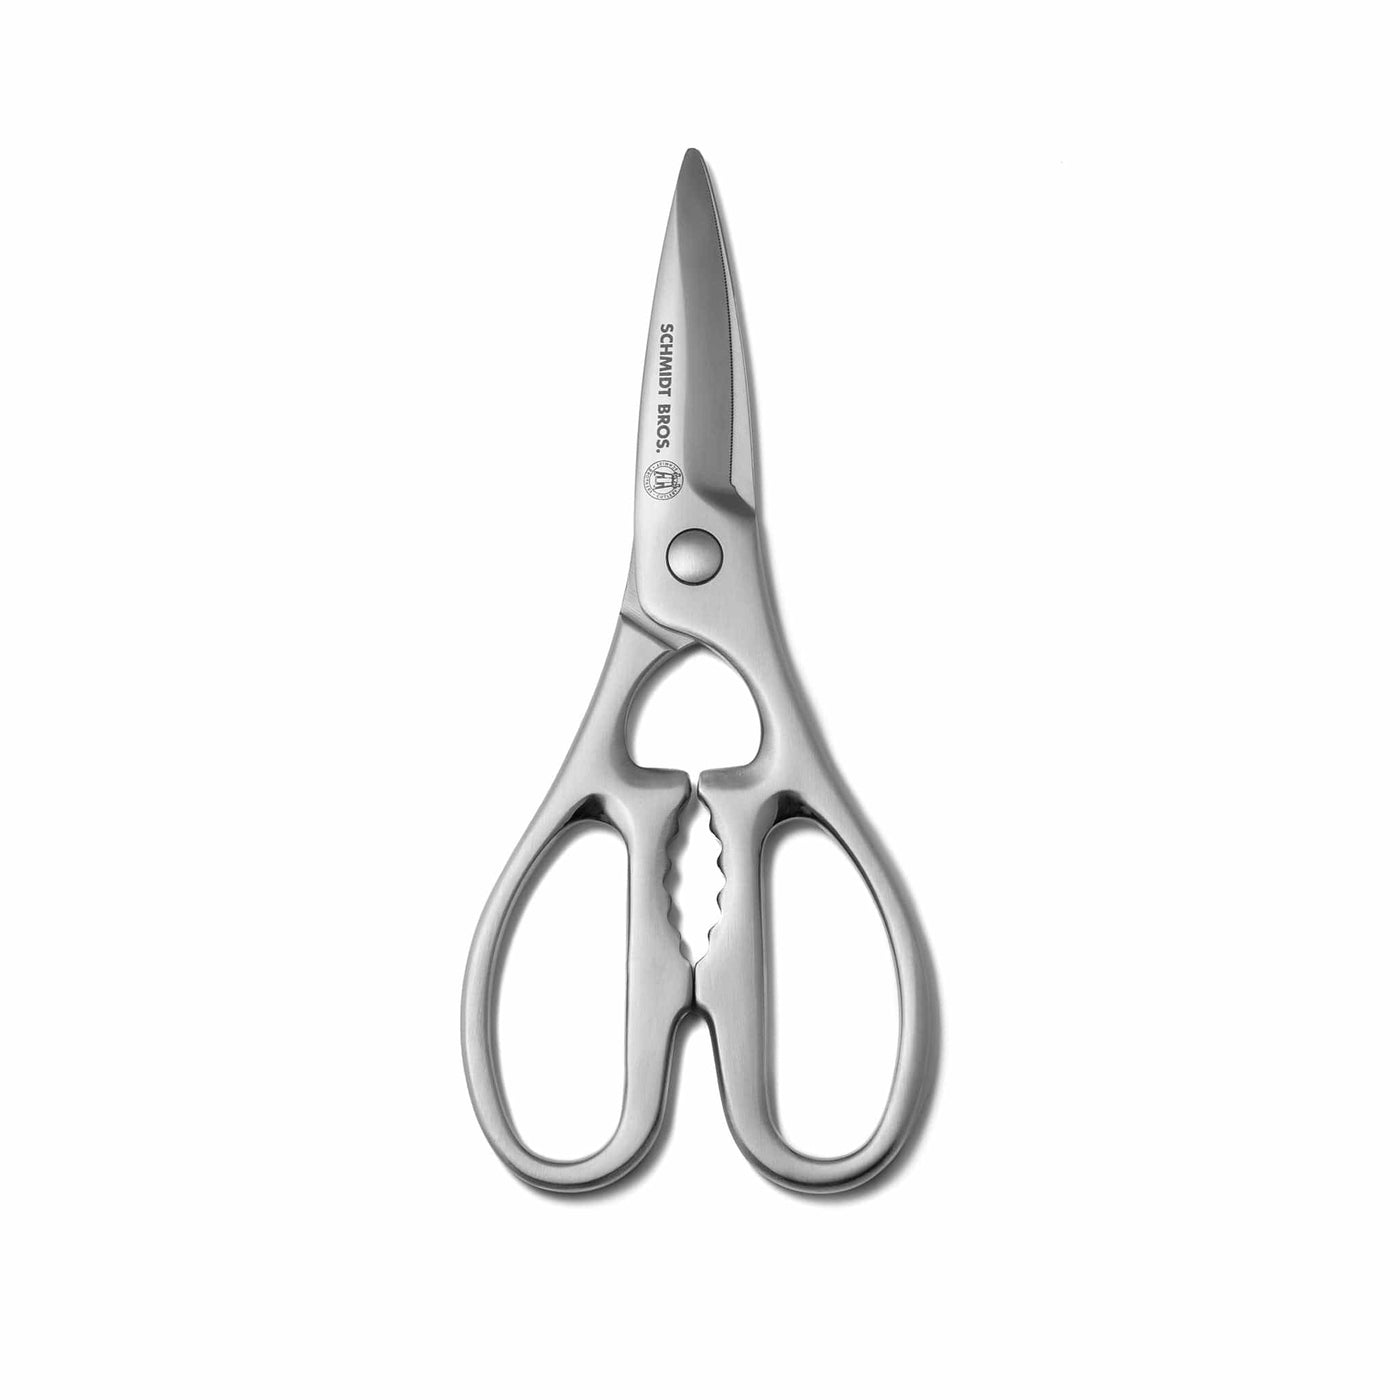 2 Sets Multifunction Kitchen Scissors / Shears -Food Prep Cutting Slicing